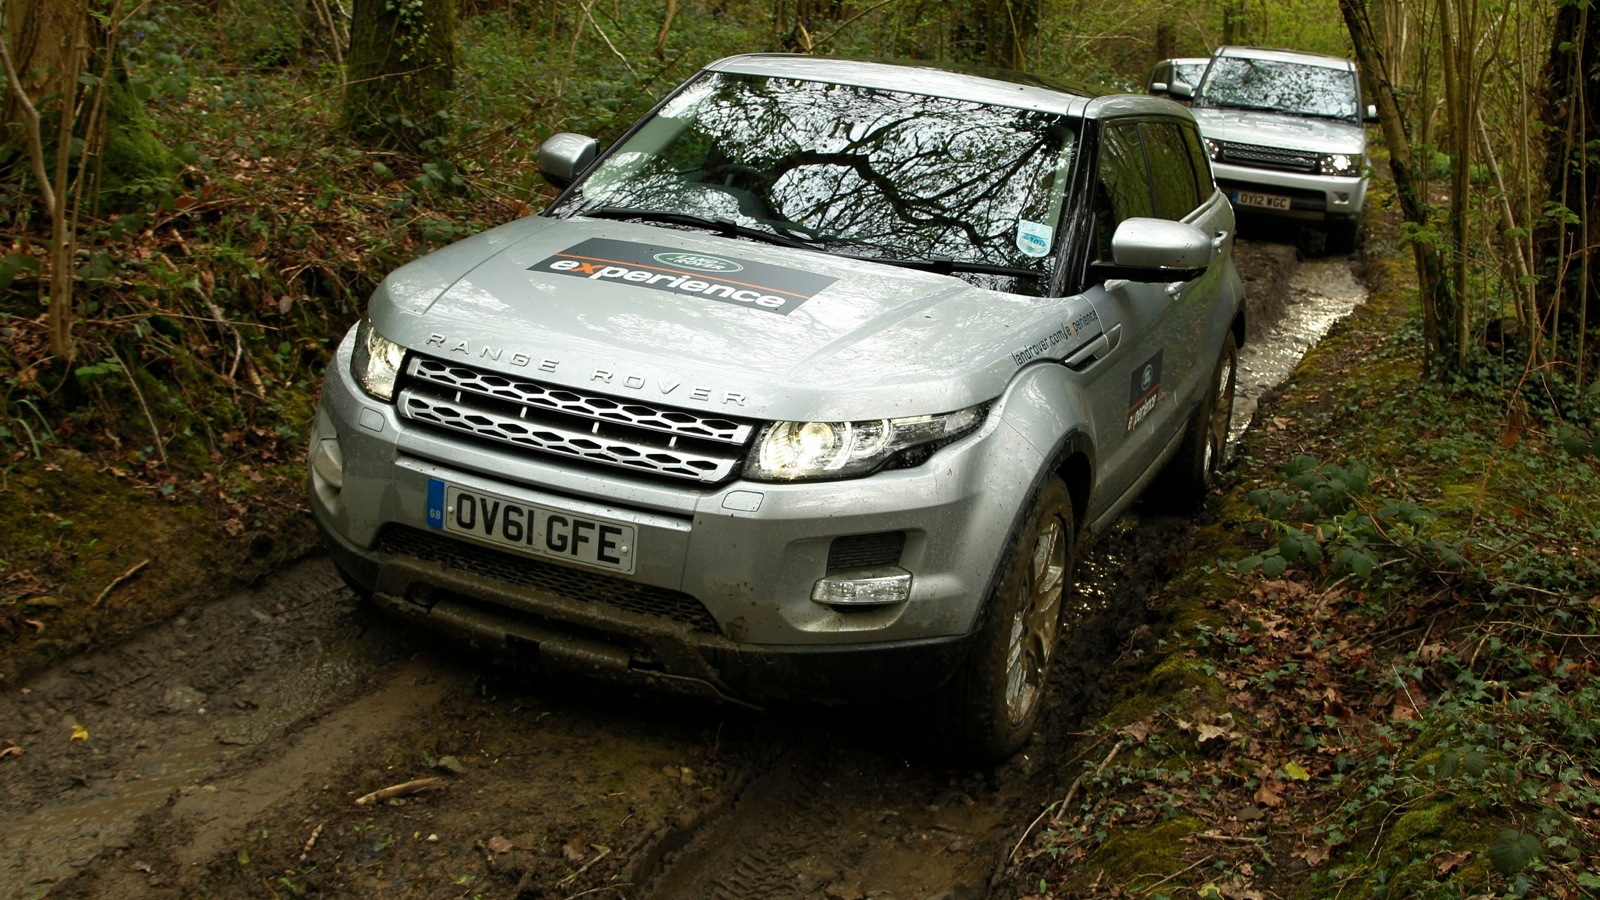 Land Rover Experience, Eastnor Castle, U.K.